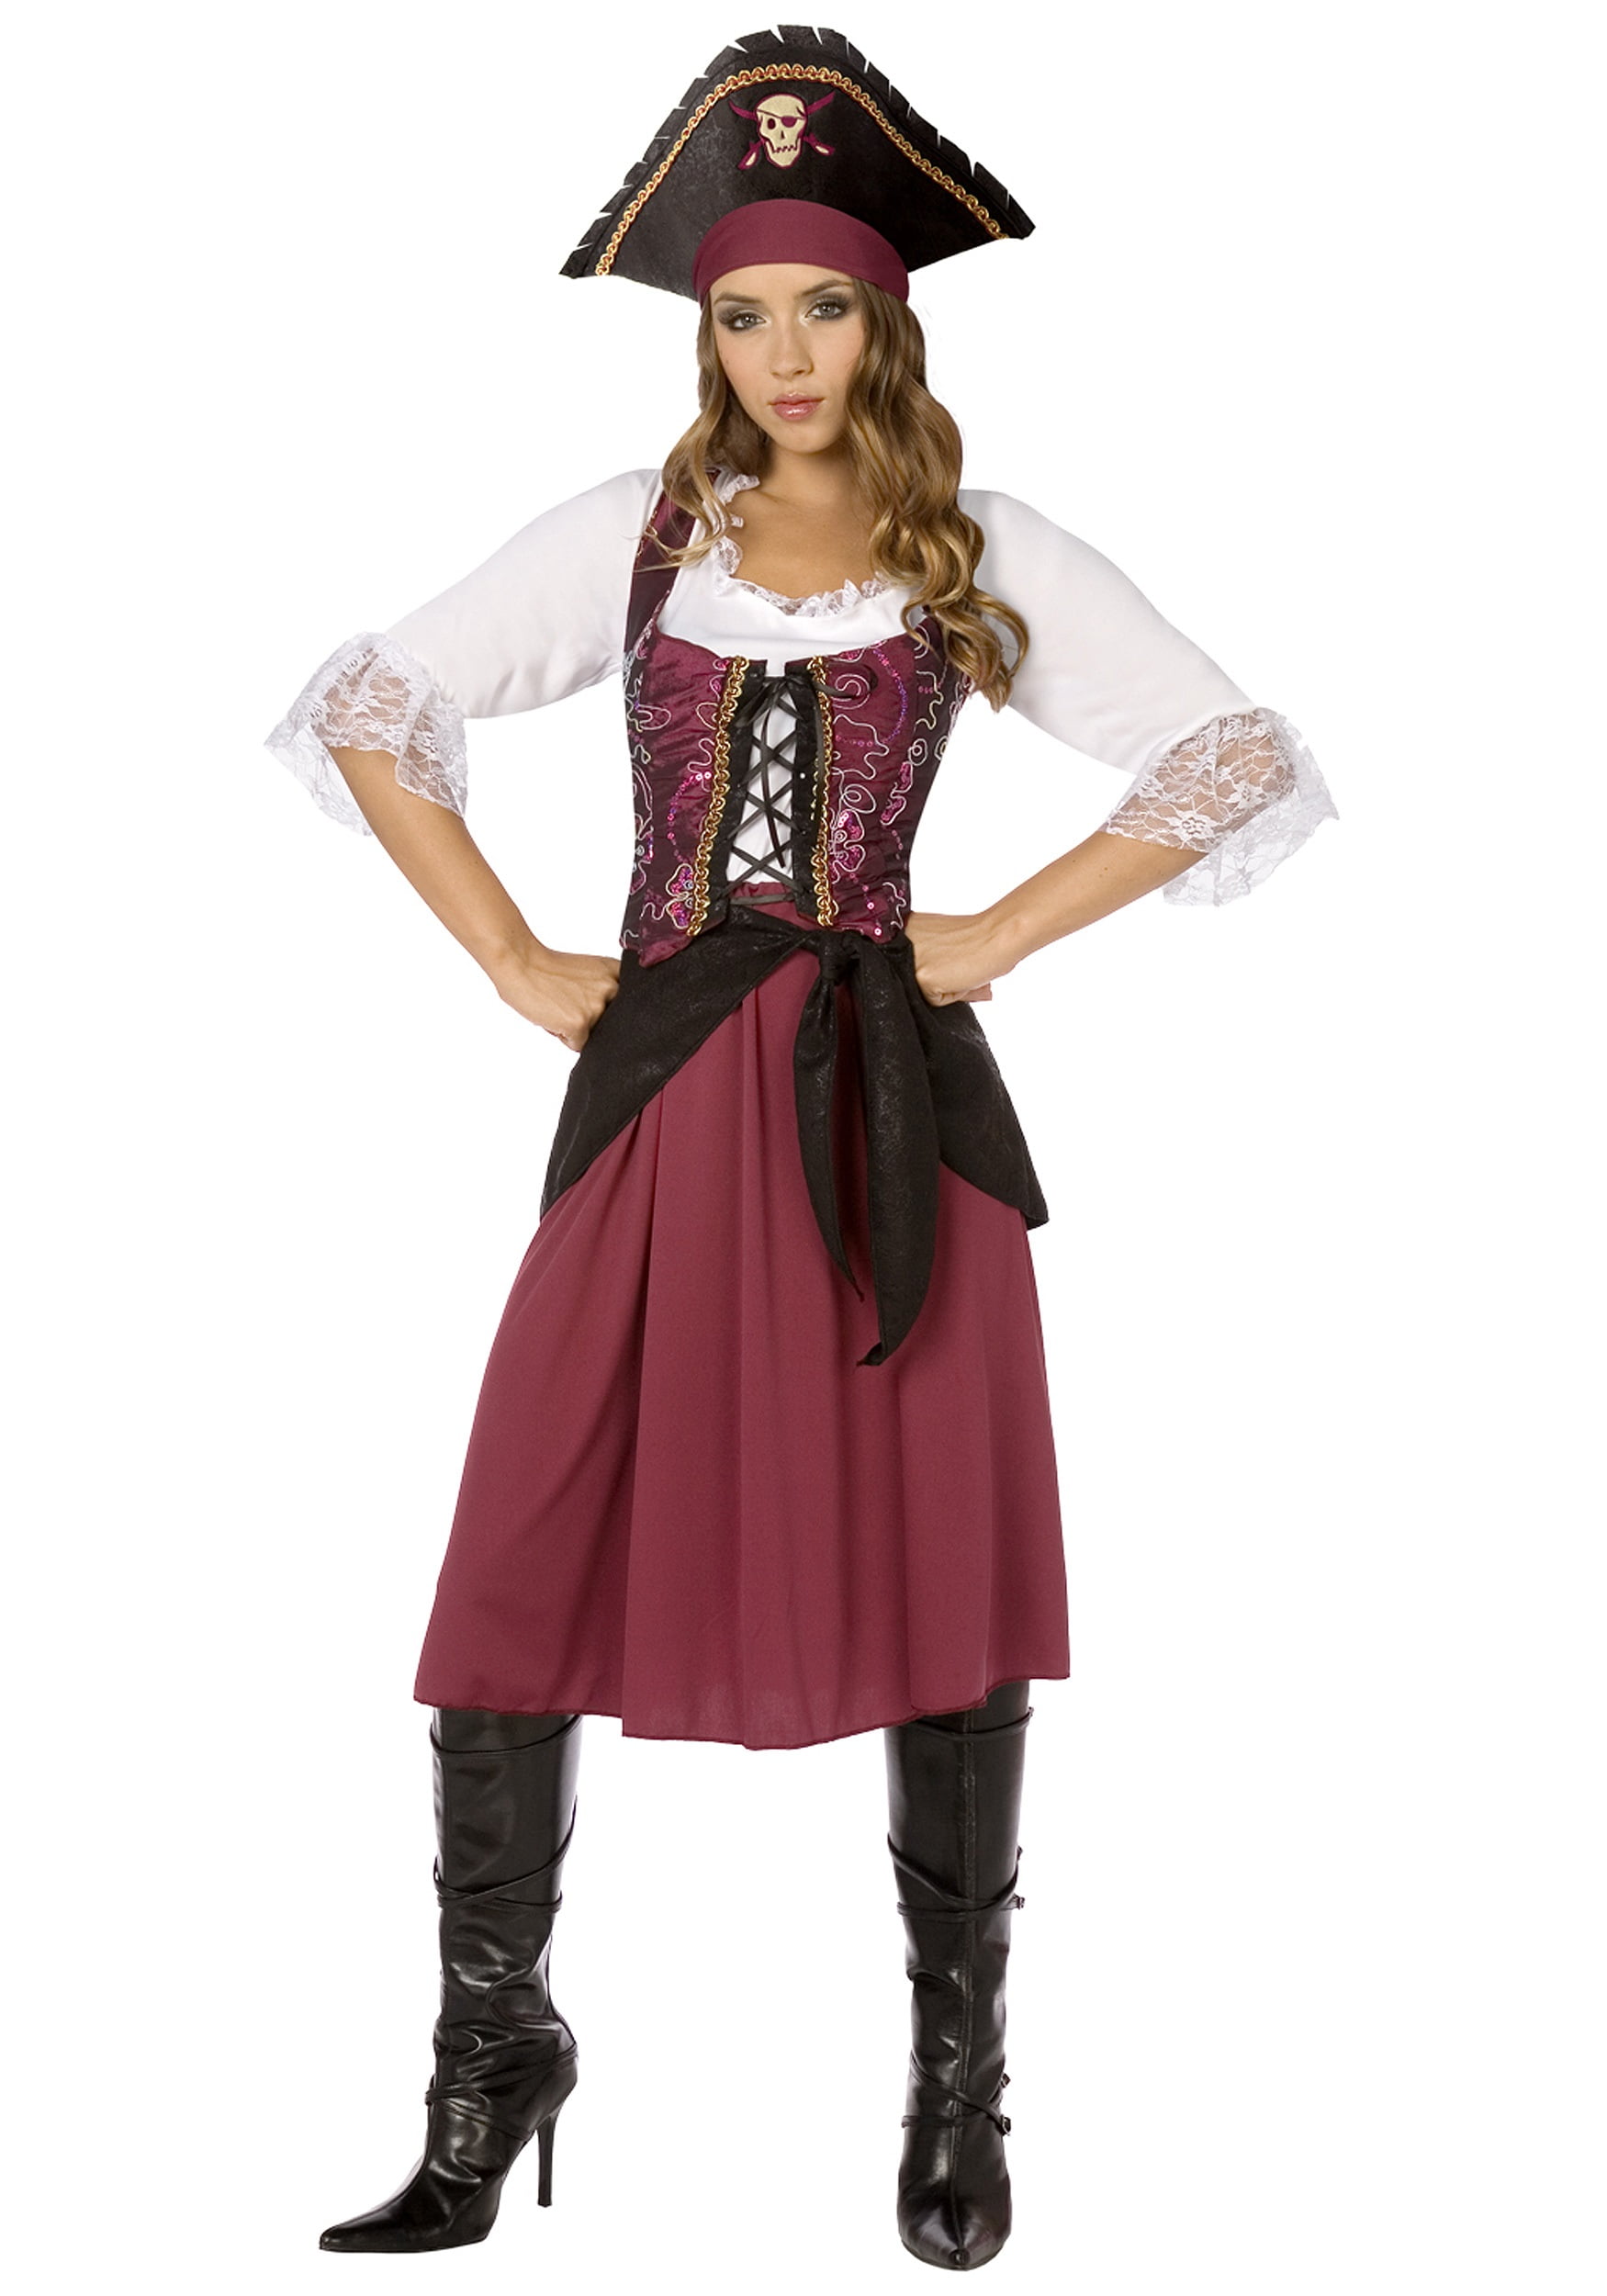 Medieval/ Renaissance/ Pirate Wench Costume 2 Pc Red & Blk Dress & Mob Cap Plus 